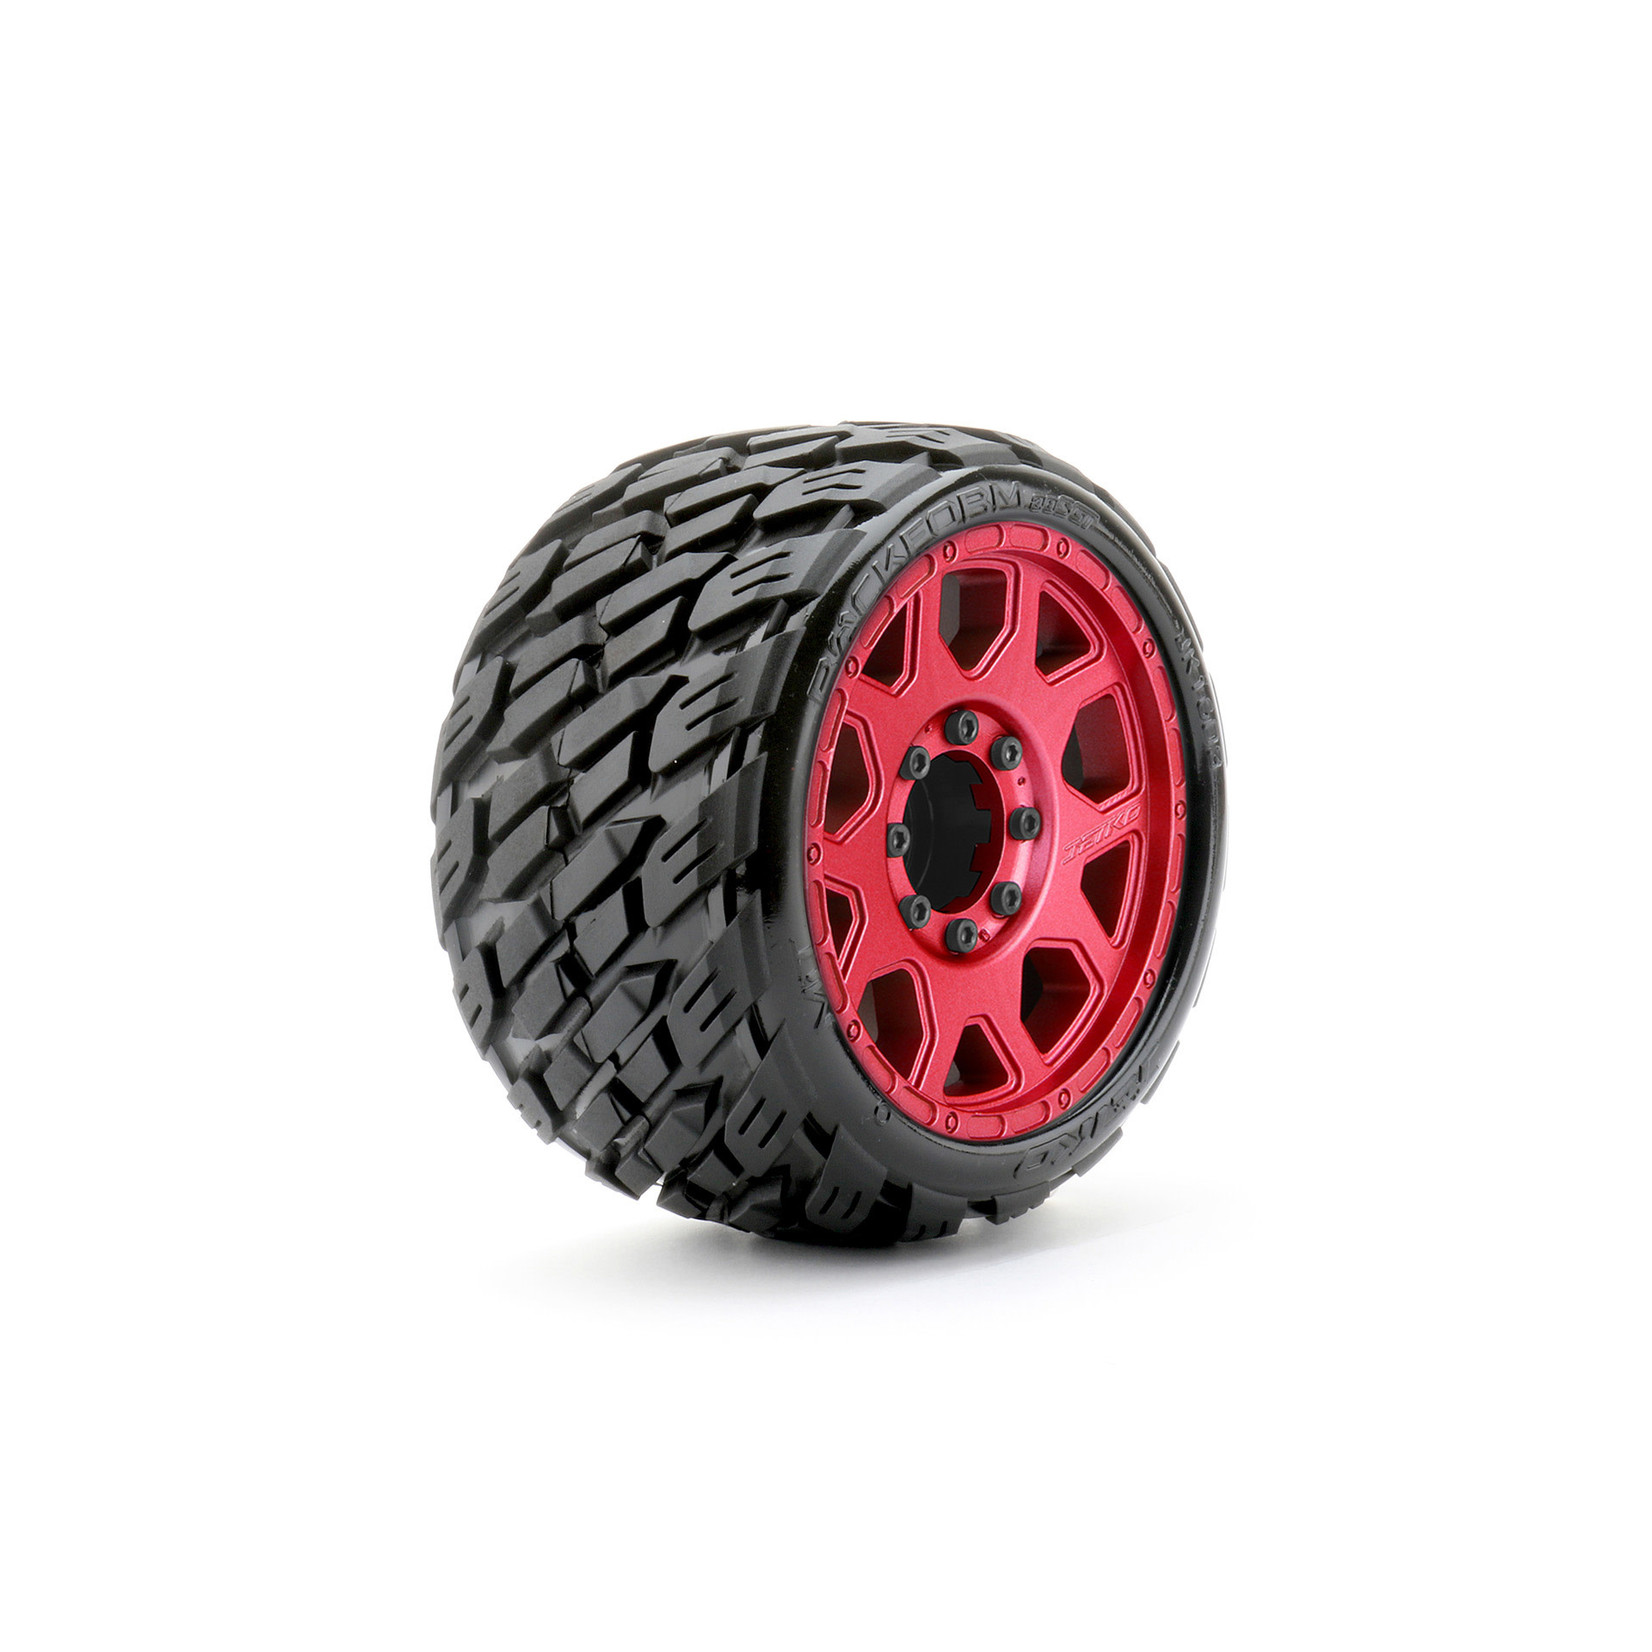 Jetko Tires Jetko Tires 1/8 SGT 3.8 EX-Rockform, Mounted on Metal Red Claw Rim, Medium Soft, Belted, Glued, 17mm 1/2" Offset #JKO1603CRMSGBB2